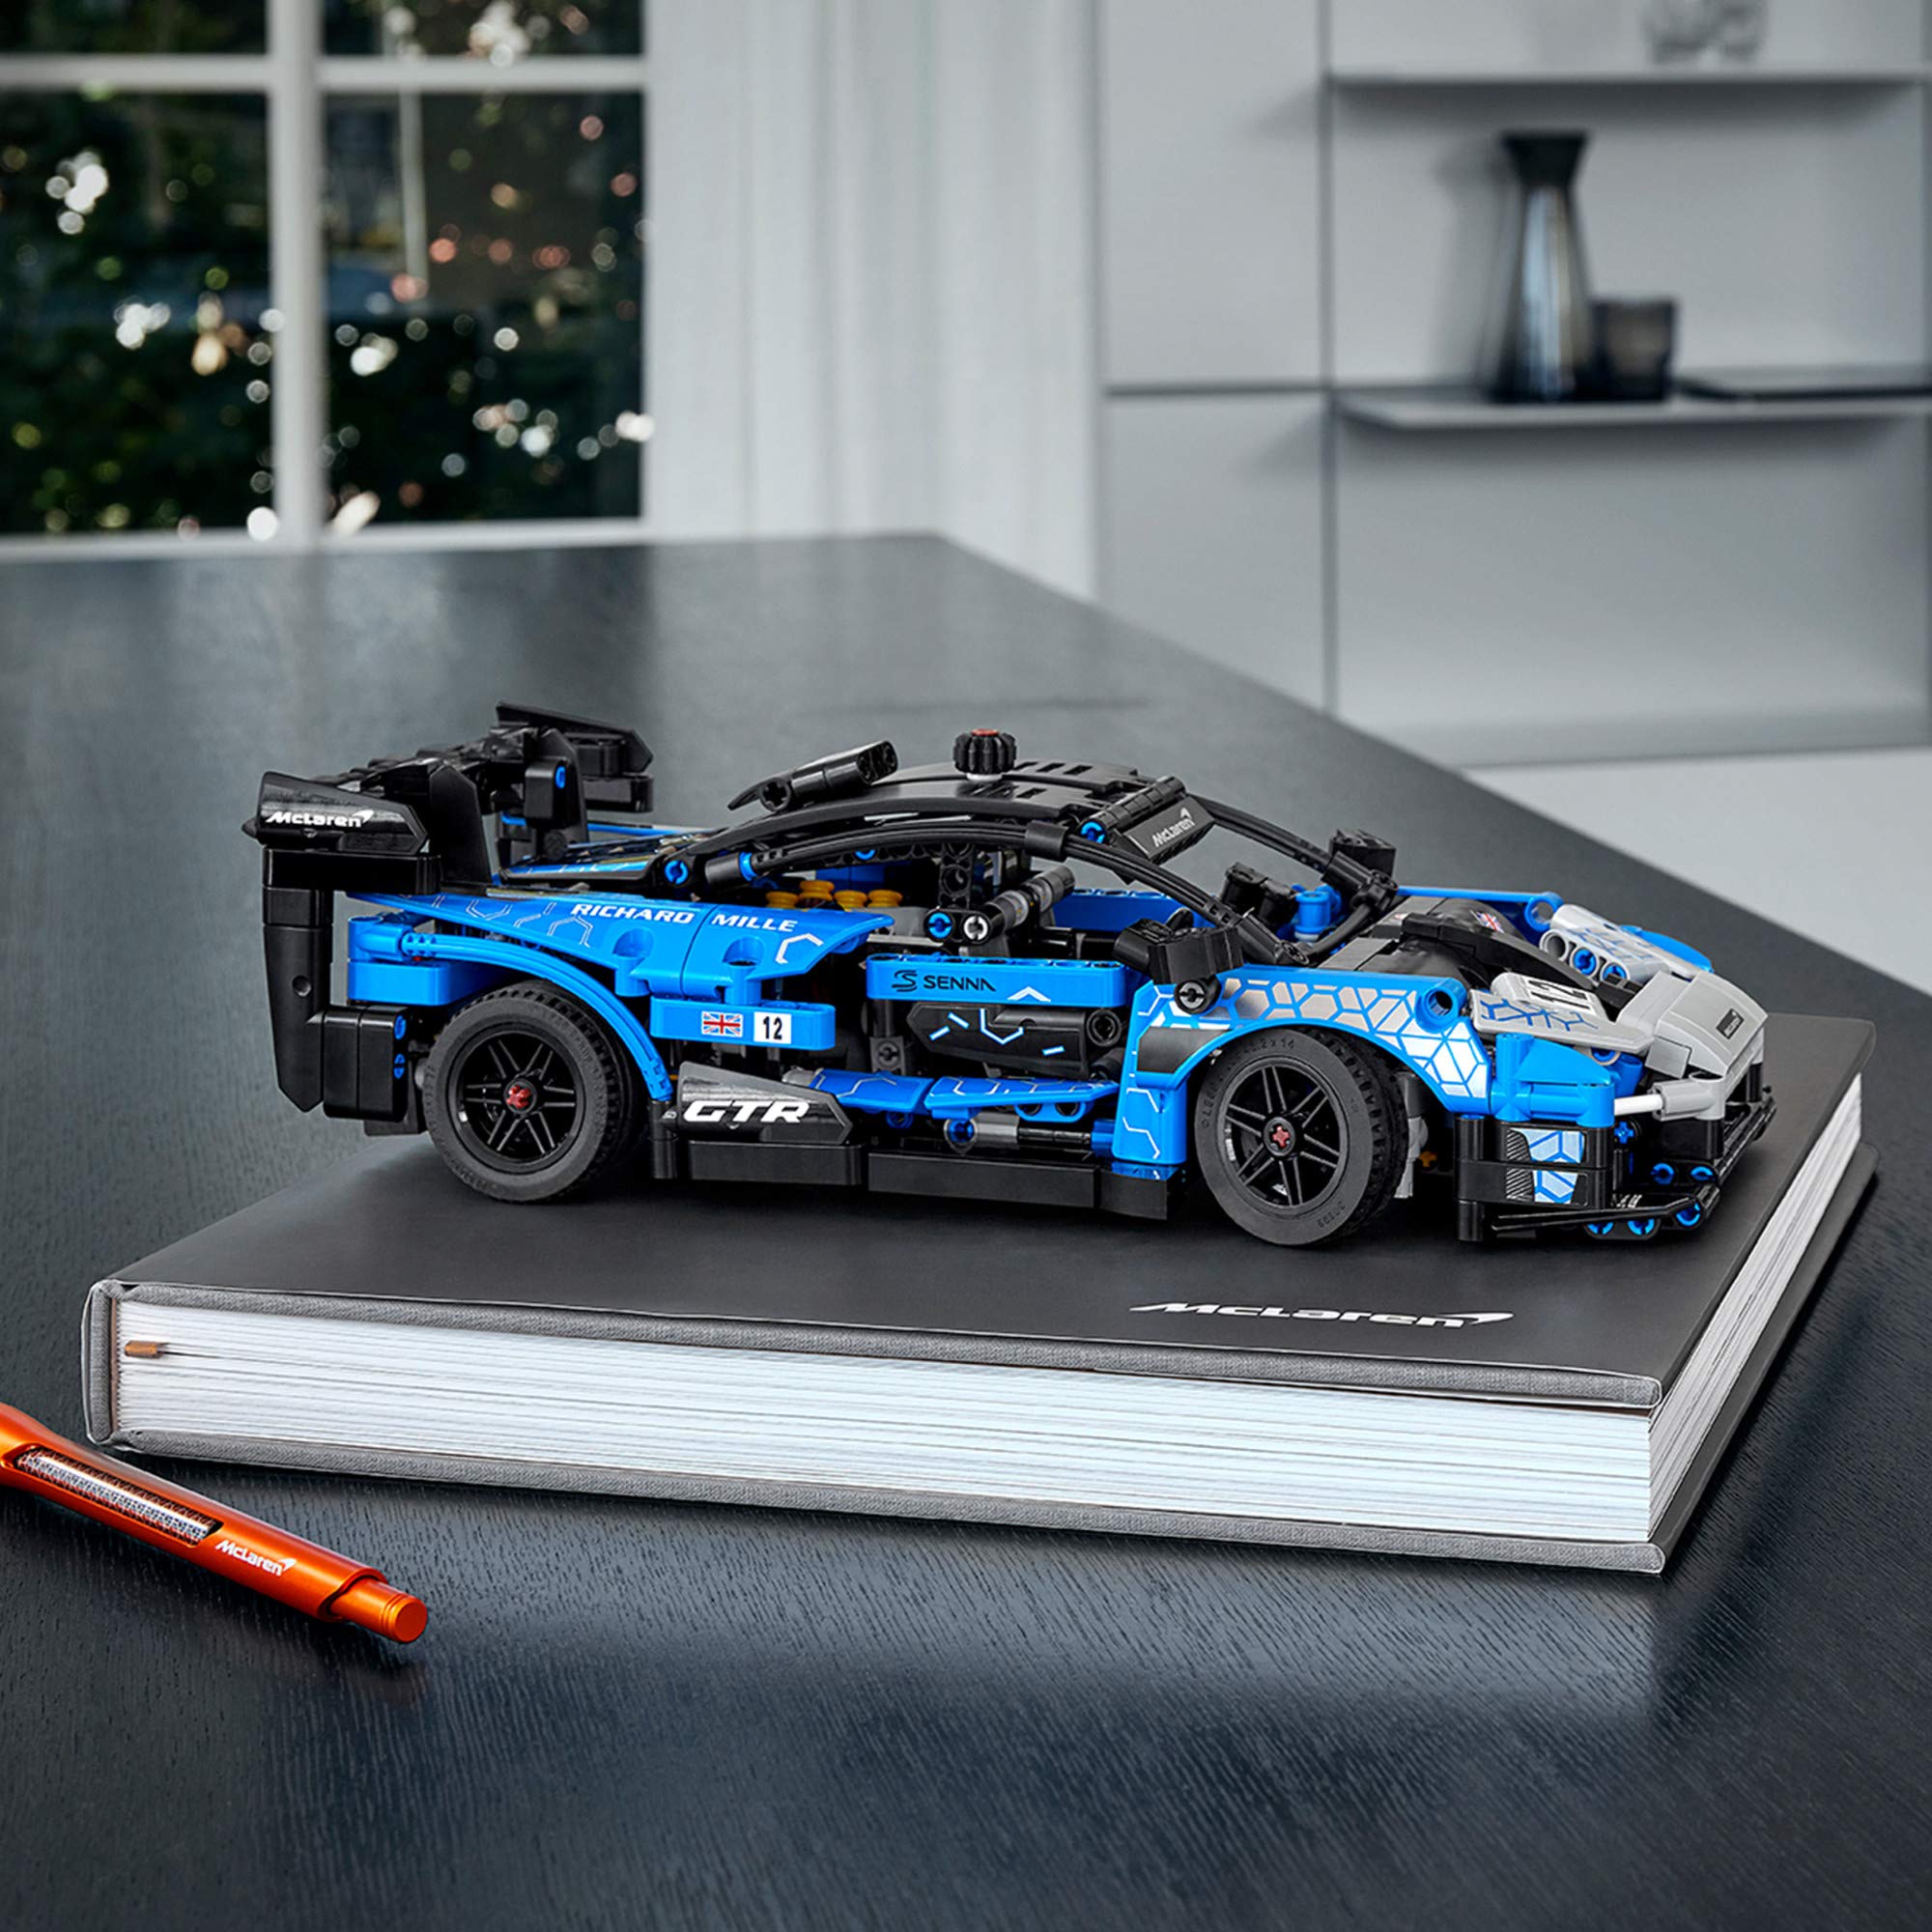 LEGO Technic McLaren Senna GTR 42123 Toy Car Model Building Kit; Build and Display an Authentic McLaren Supercar, New 2021 (830 Pieces) (Open Box,Like New)